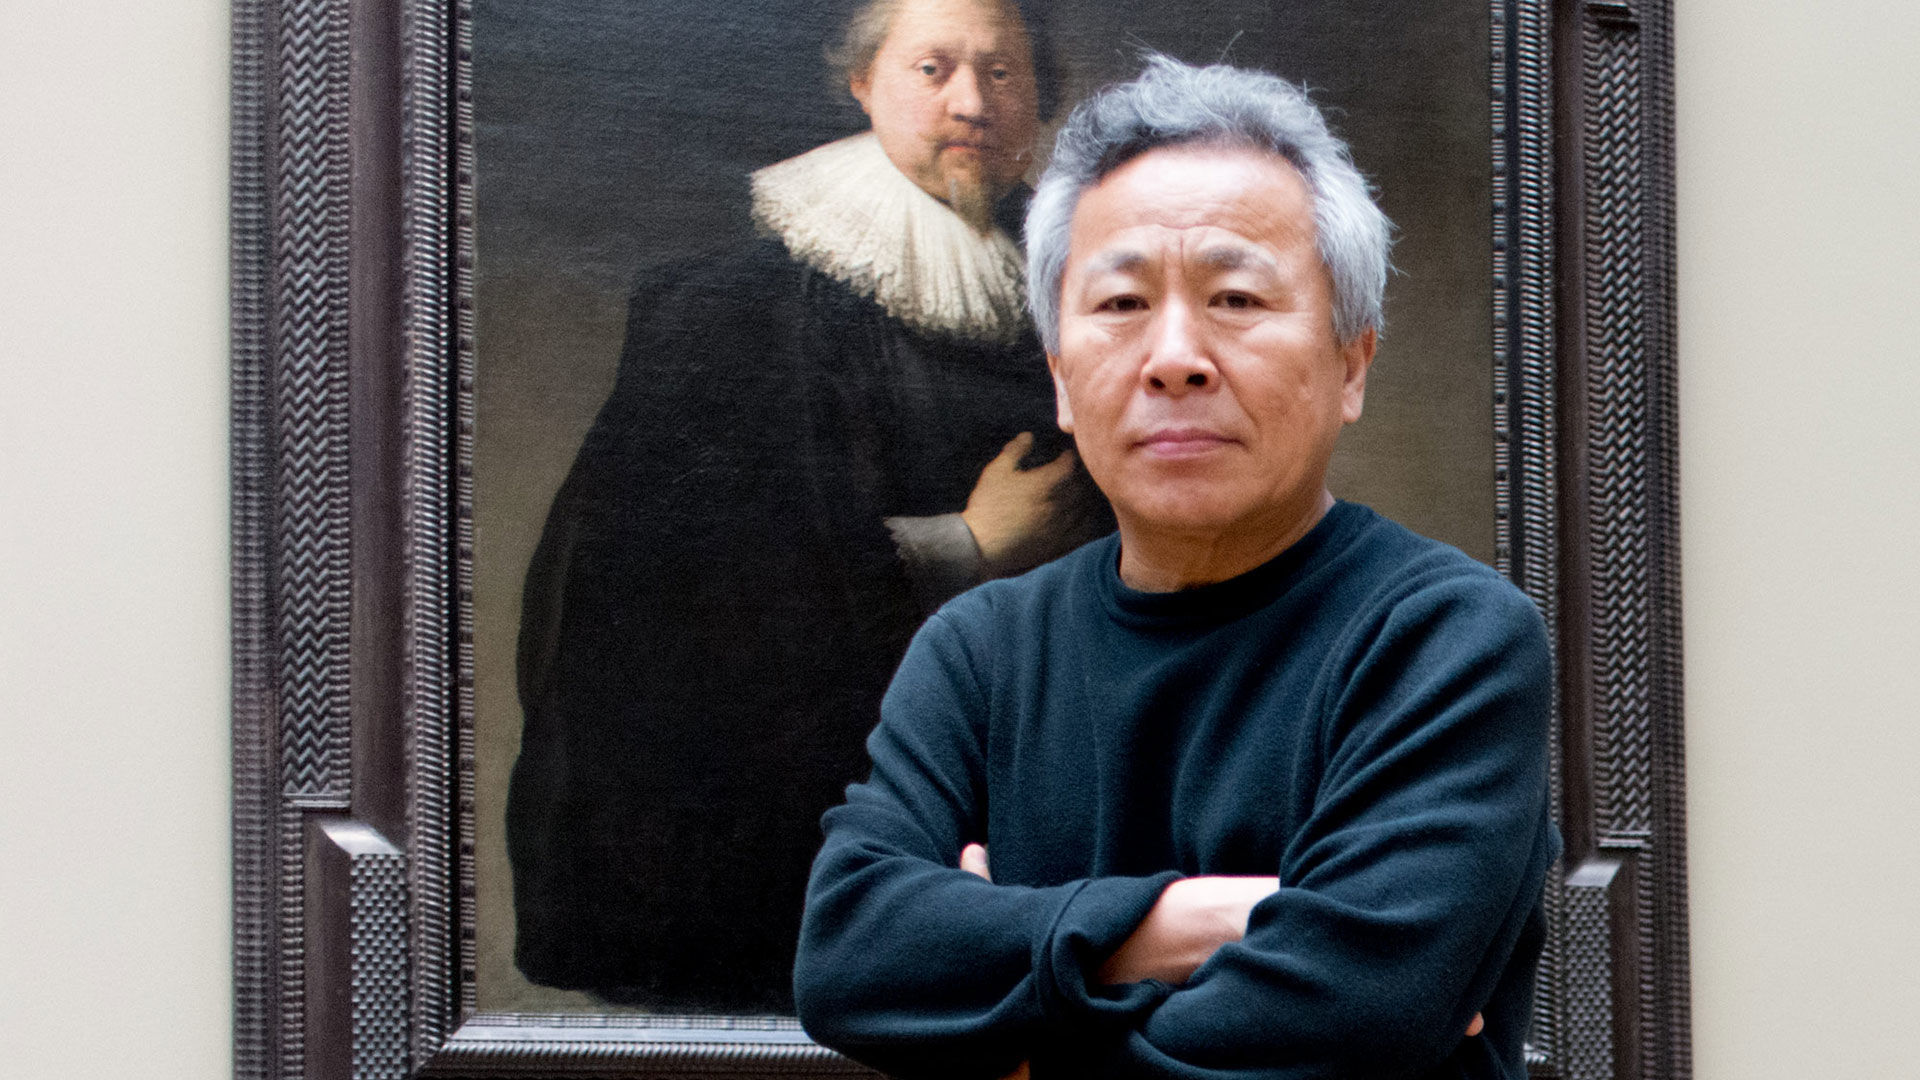 Il Lee on Rembrandt van Rijn's portraits